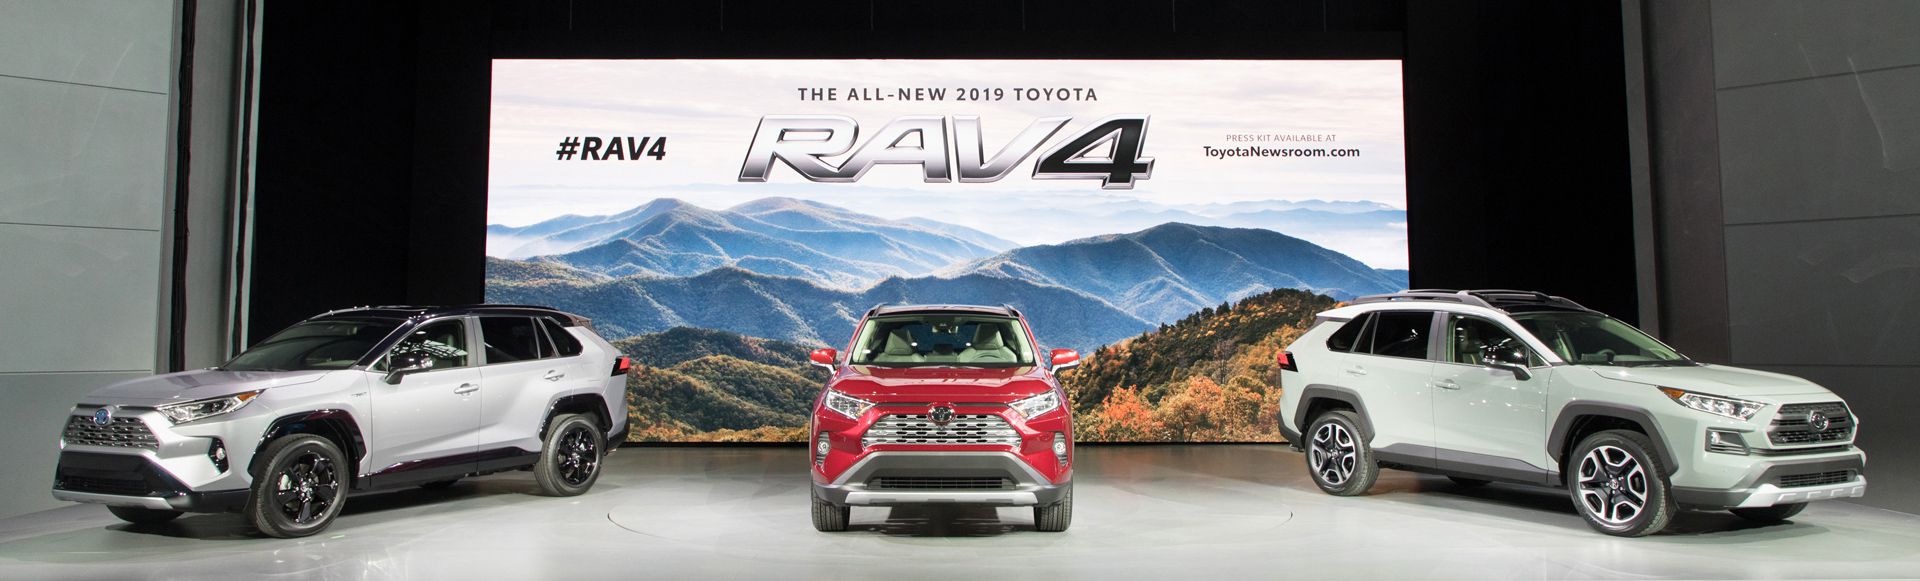 All-New 2019 Toyota RAV4 Serves Up a Breakthrough Debut at New York International Auto Show